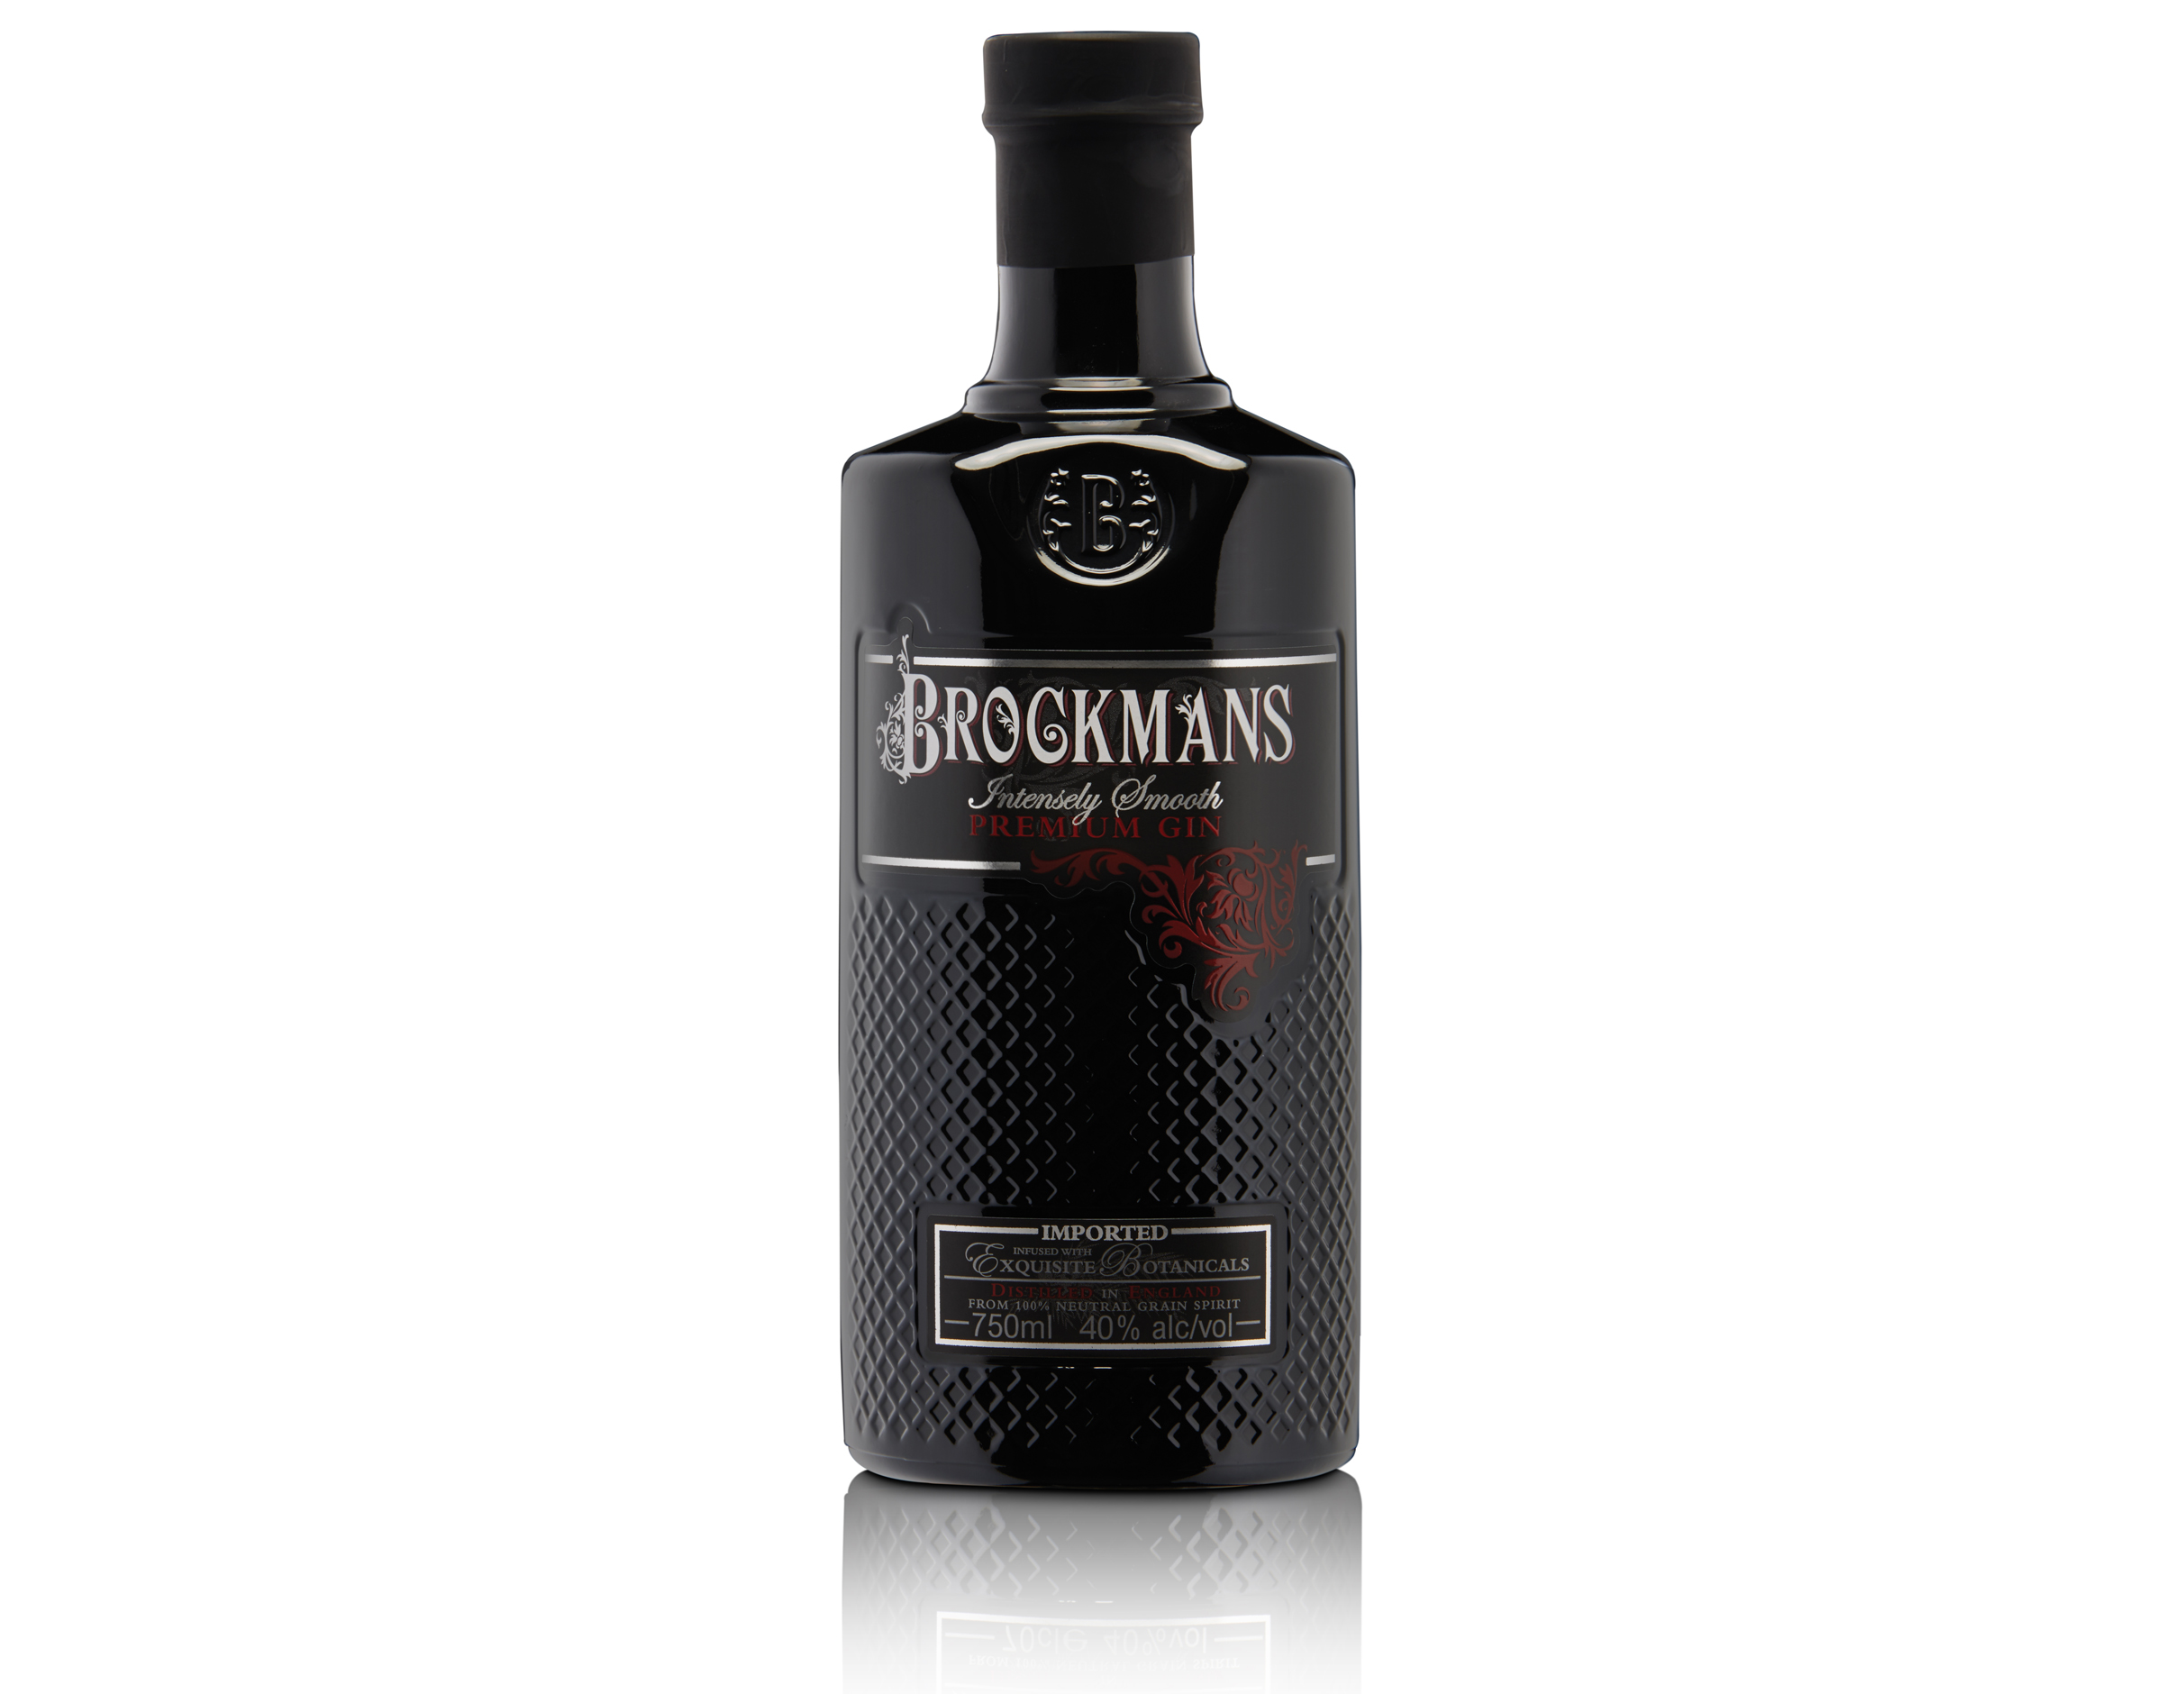 BrockmansGin-bottle